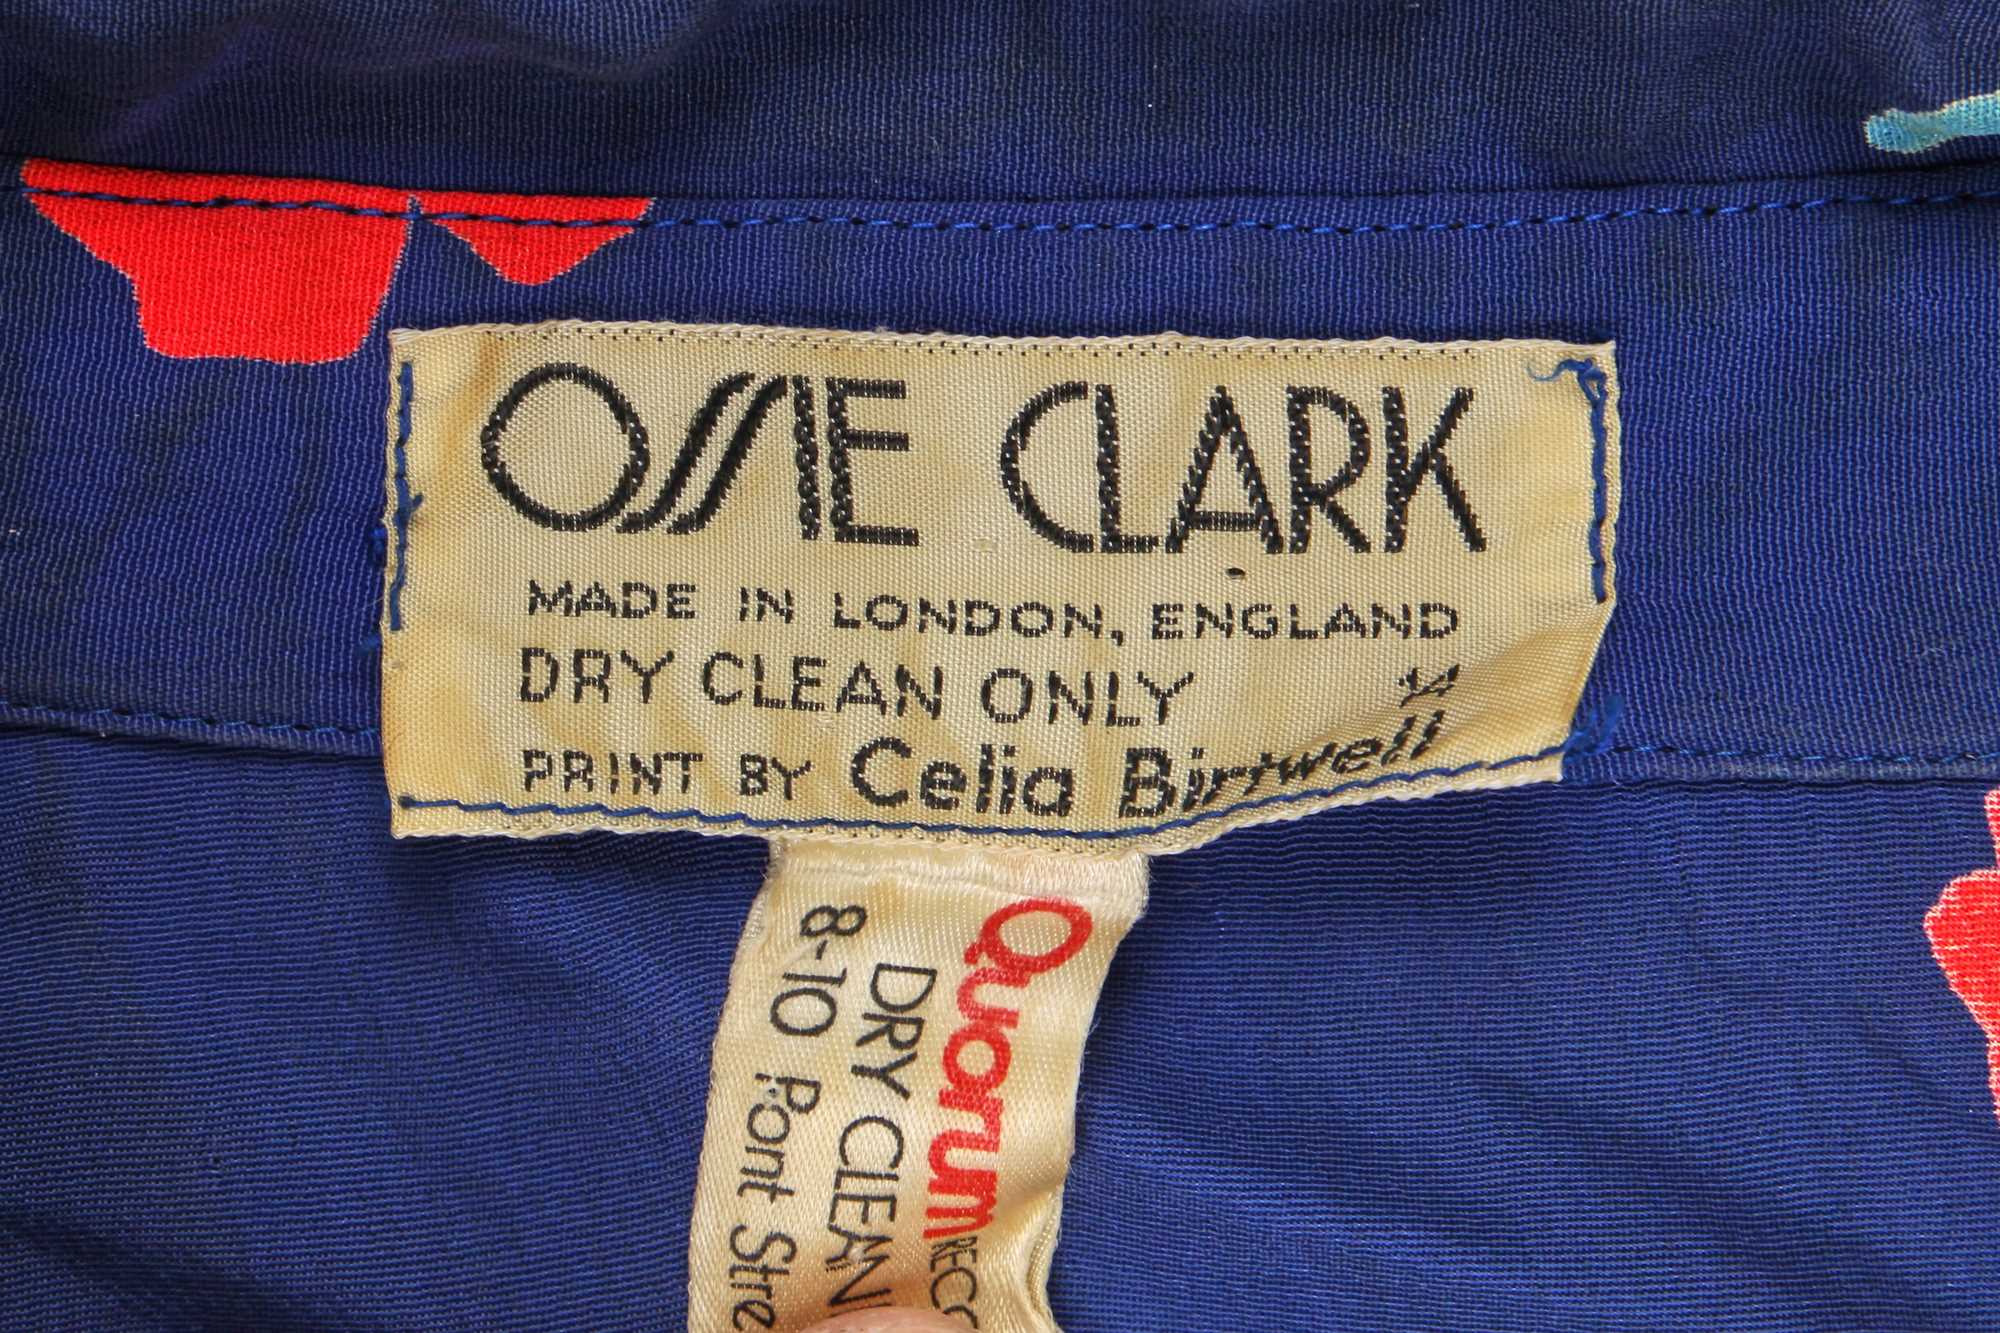 Lot 275 - An Ossie Clark printed marocain blouse,